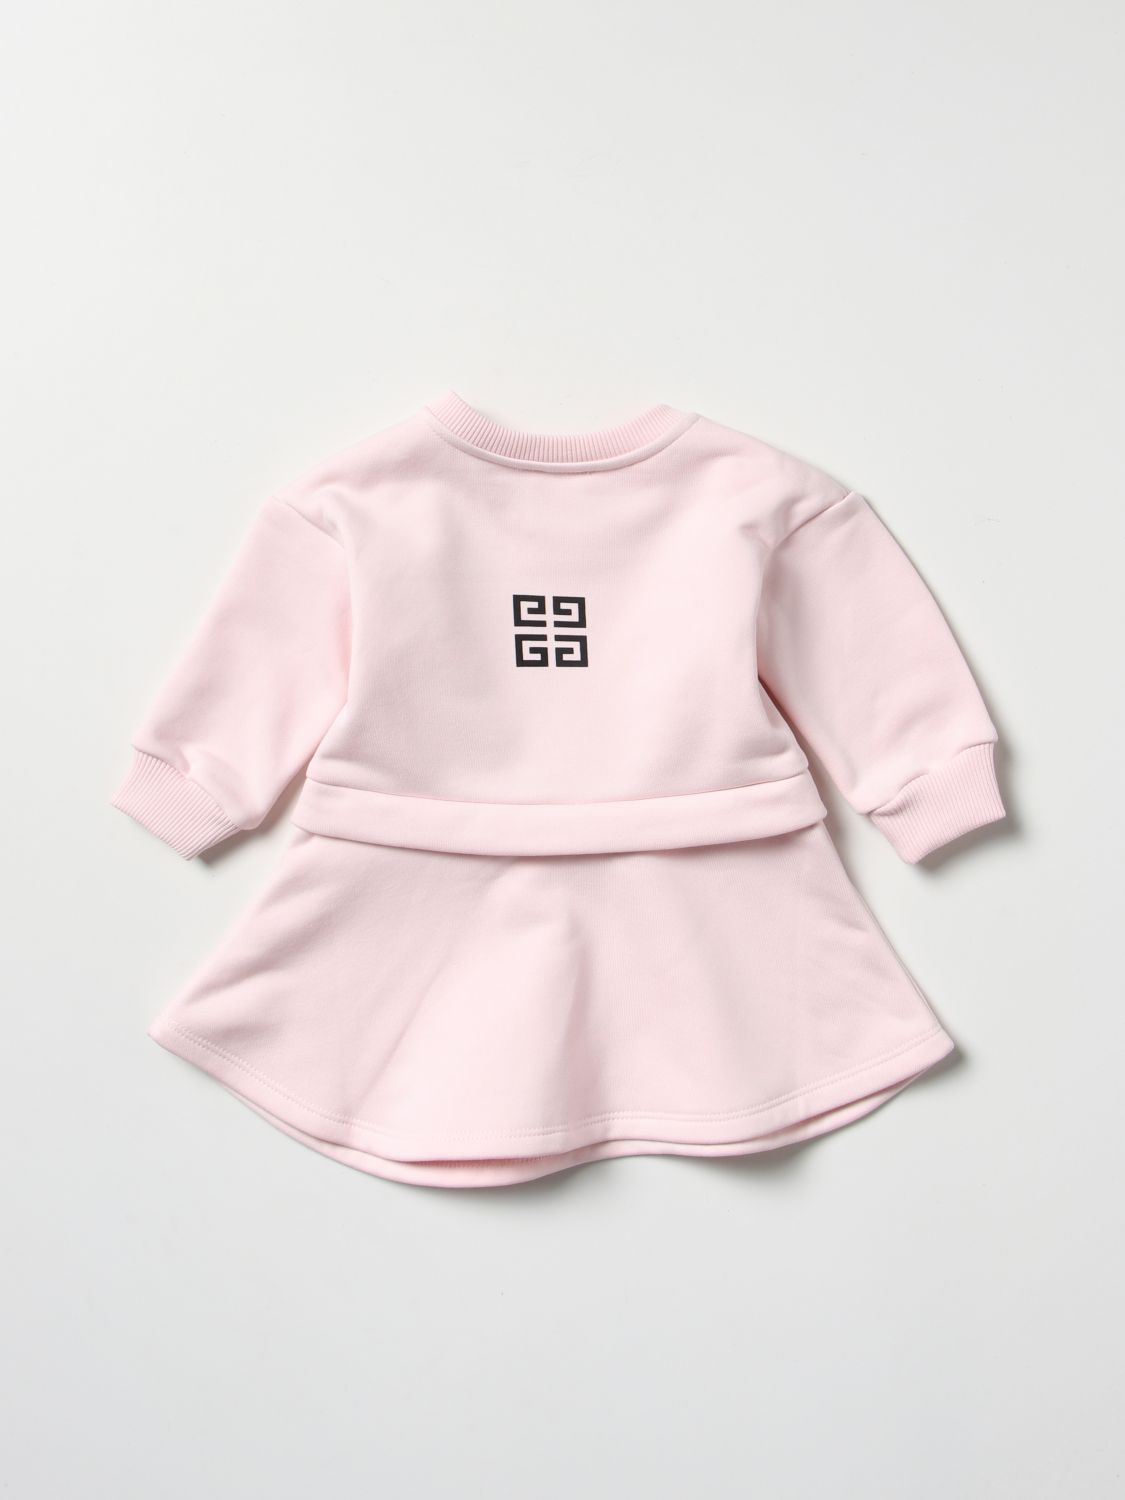 Strampler Givenchy: Givenchy Baby Strampler pink 2